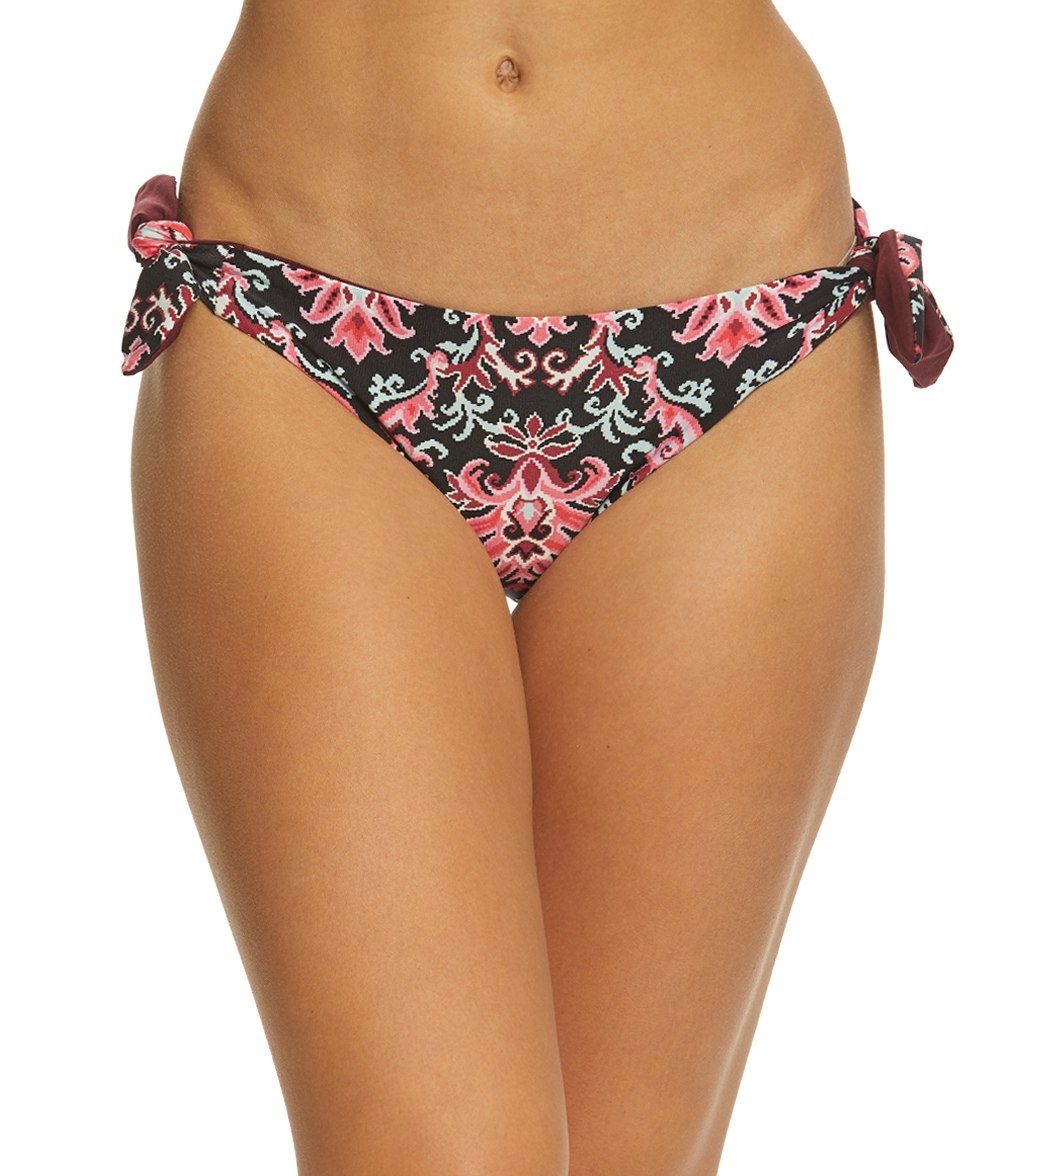 Kate Spade New York Oasis Beach Reversible Bikini Bottom - Black Large - Swimoutlet.com